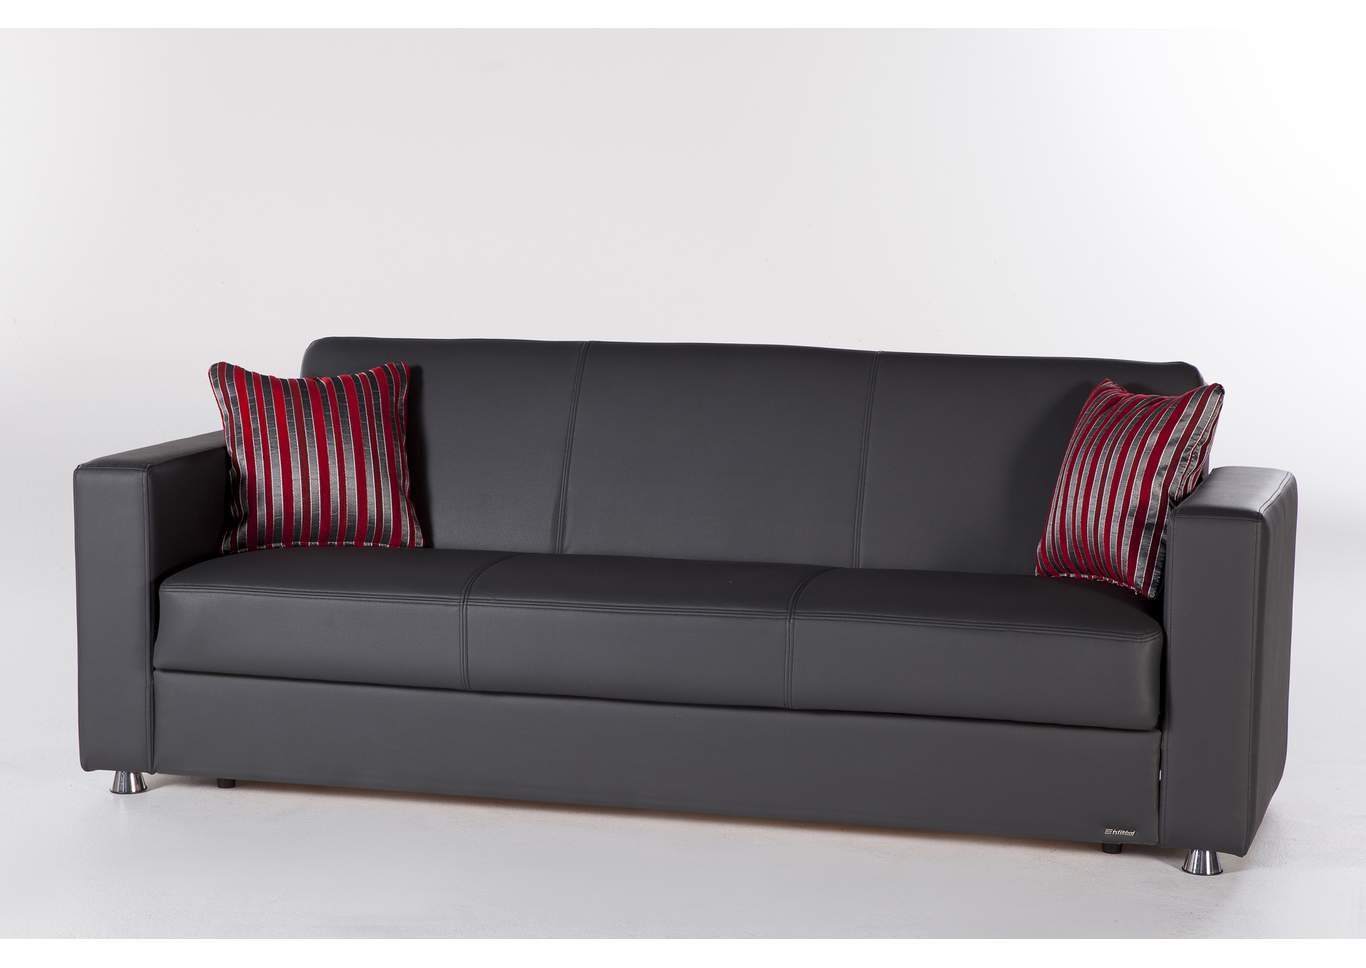 Tokyo Santa Glory Gray 3 Seat Sleeper Sofa,Hudson Furniture & Bedding